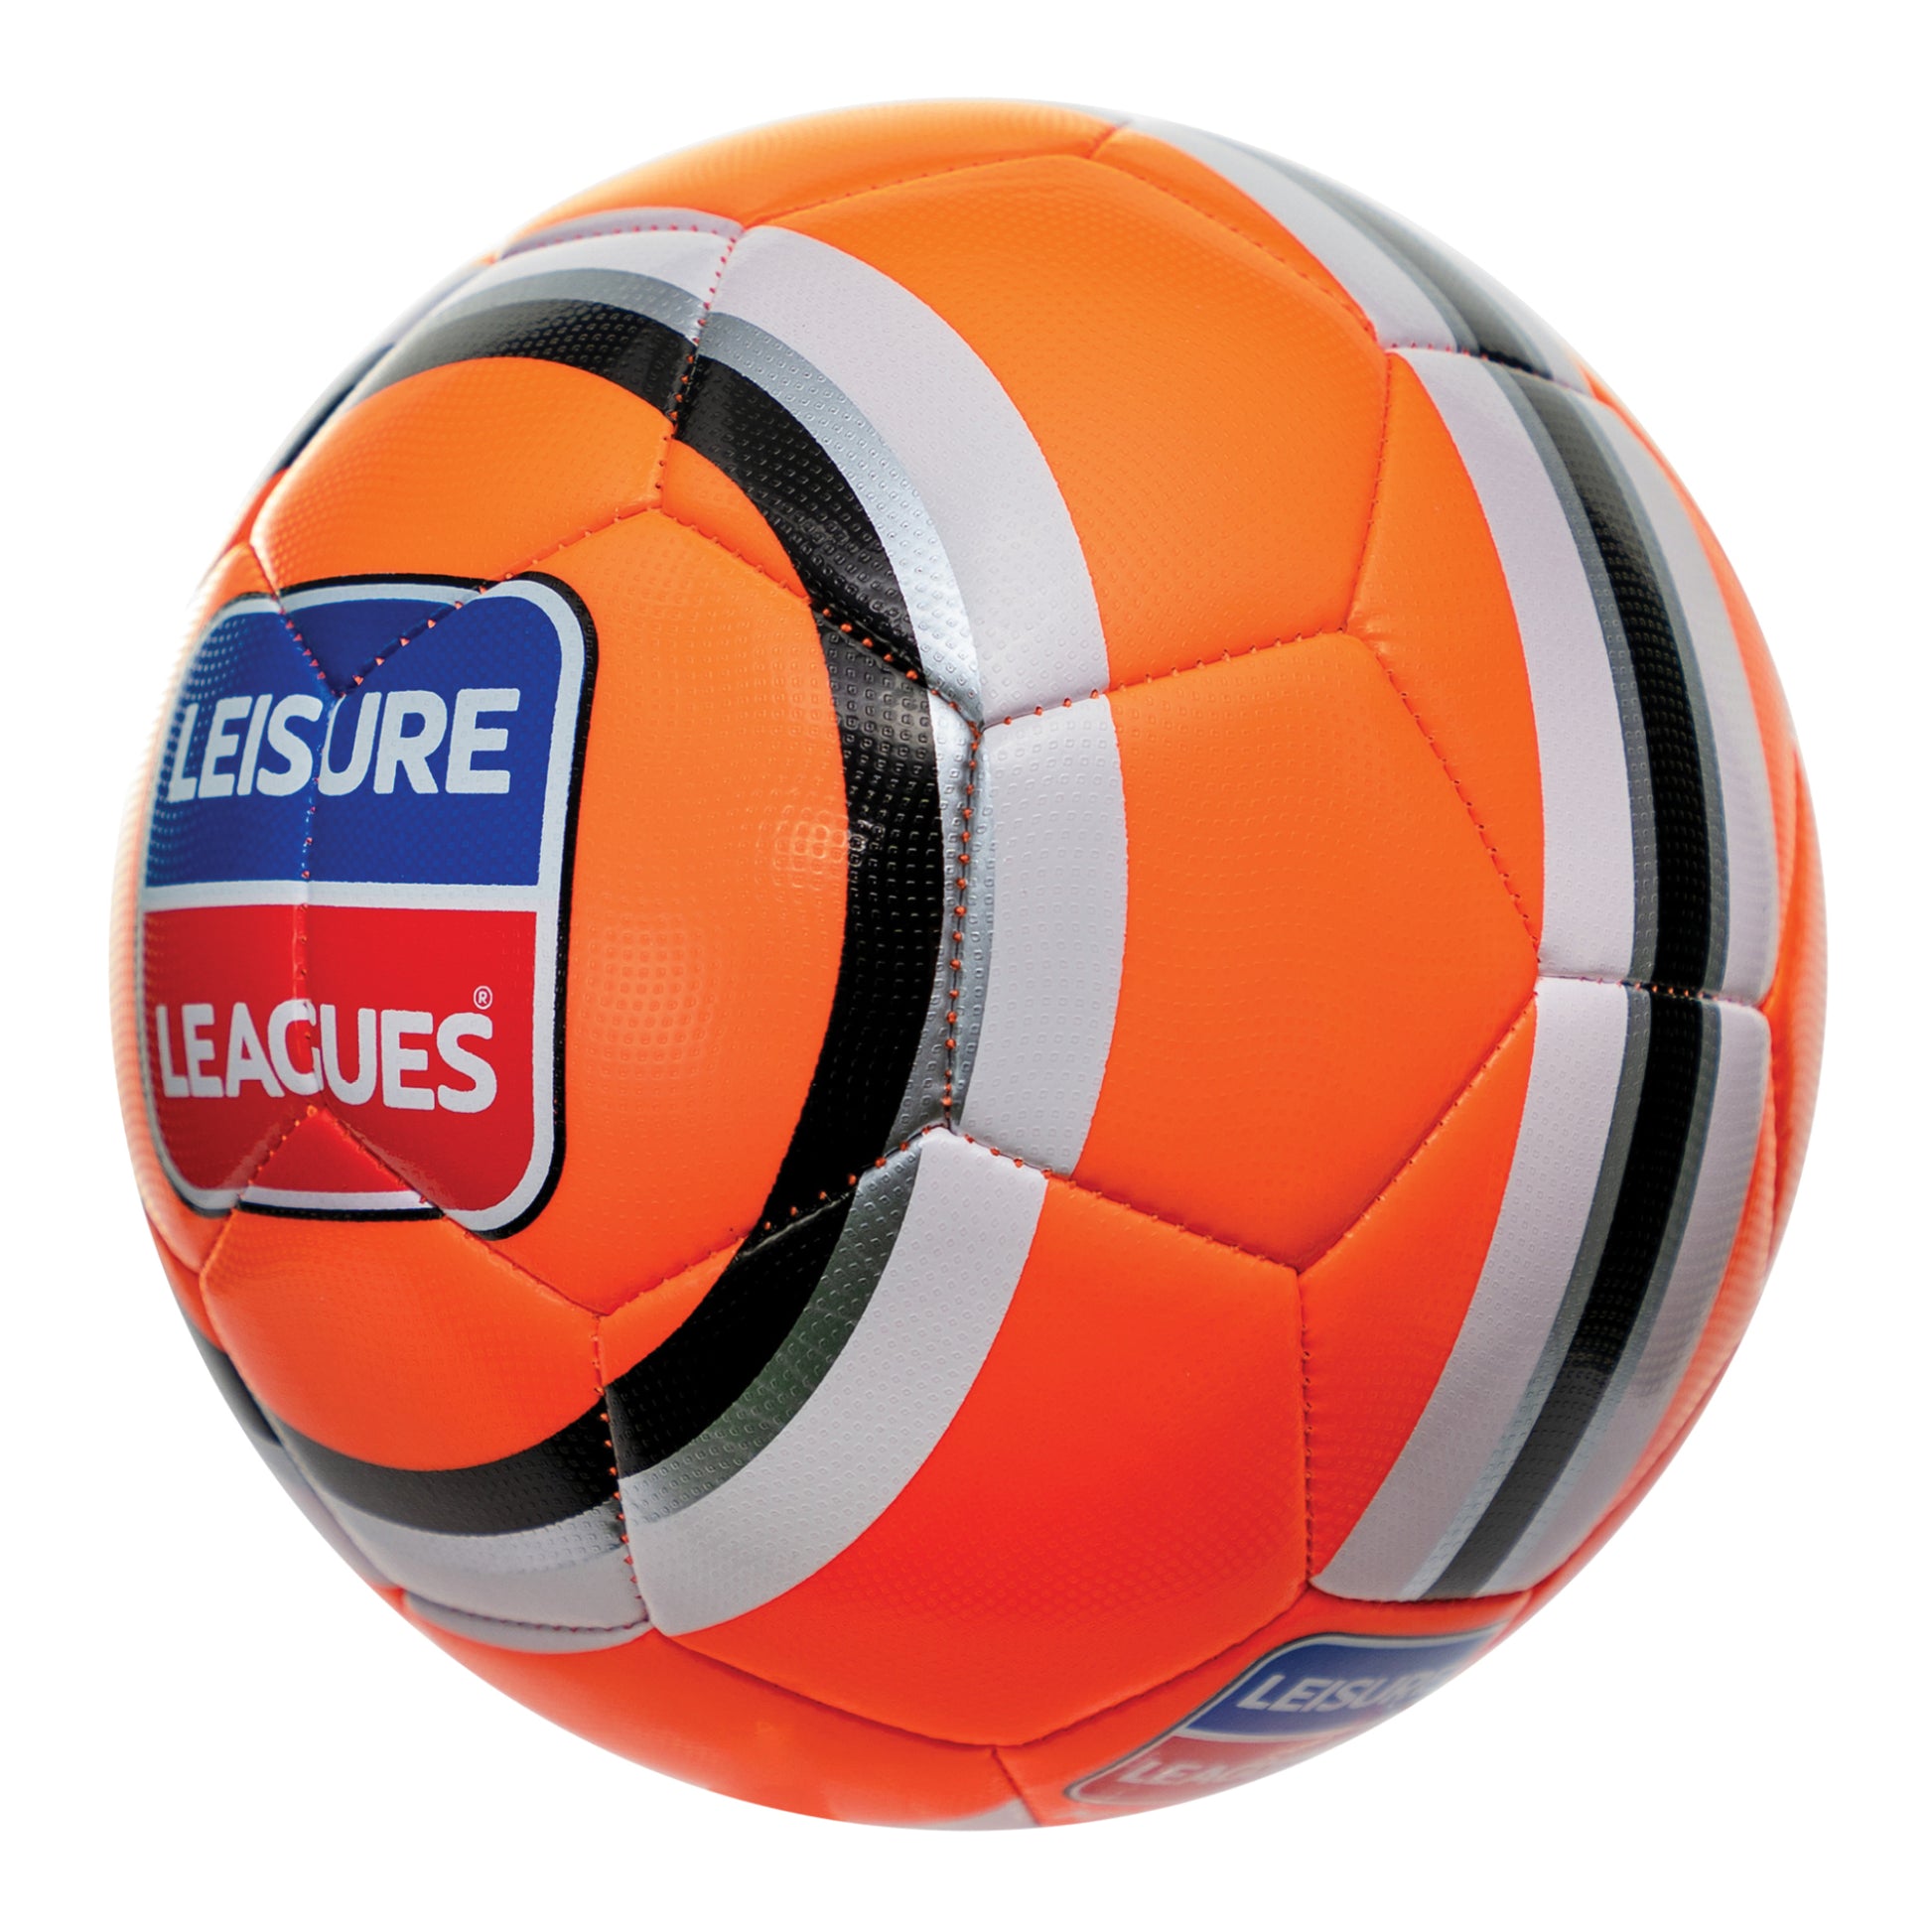 Leisure leagues football Size 5 Football Orange